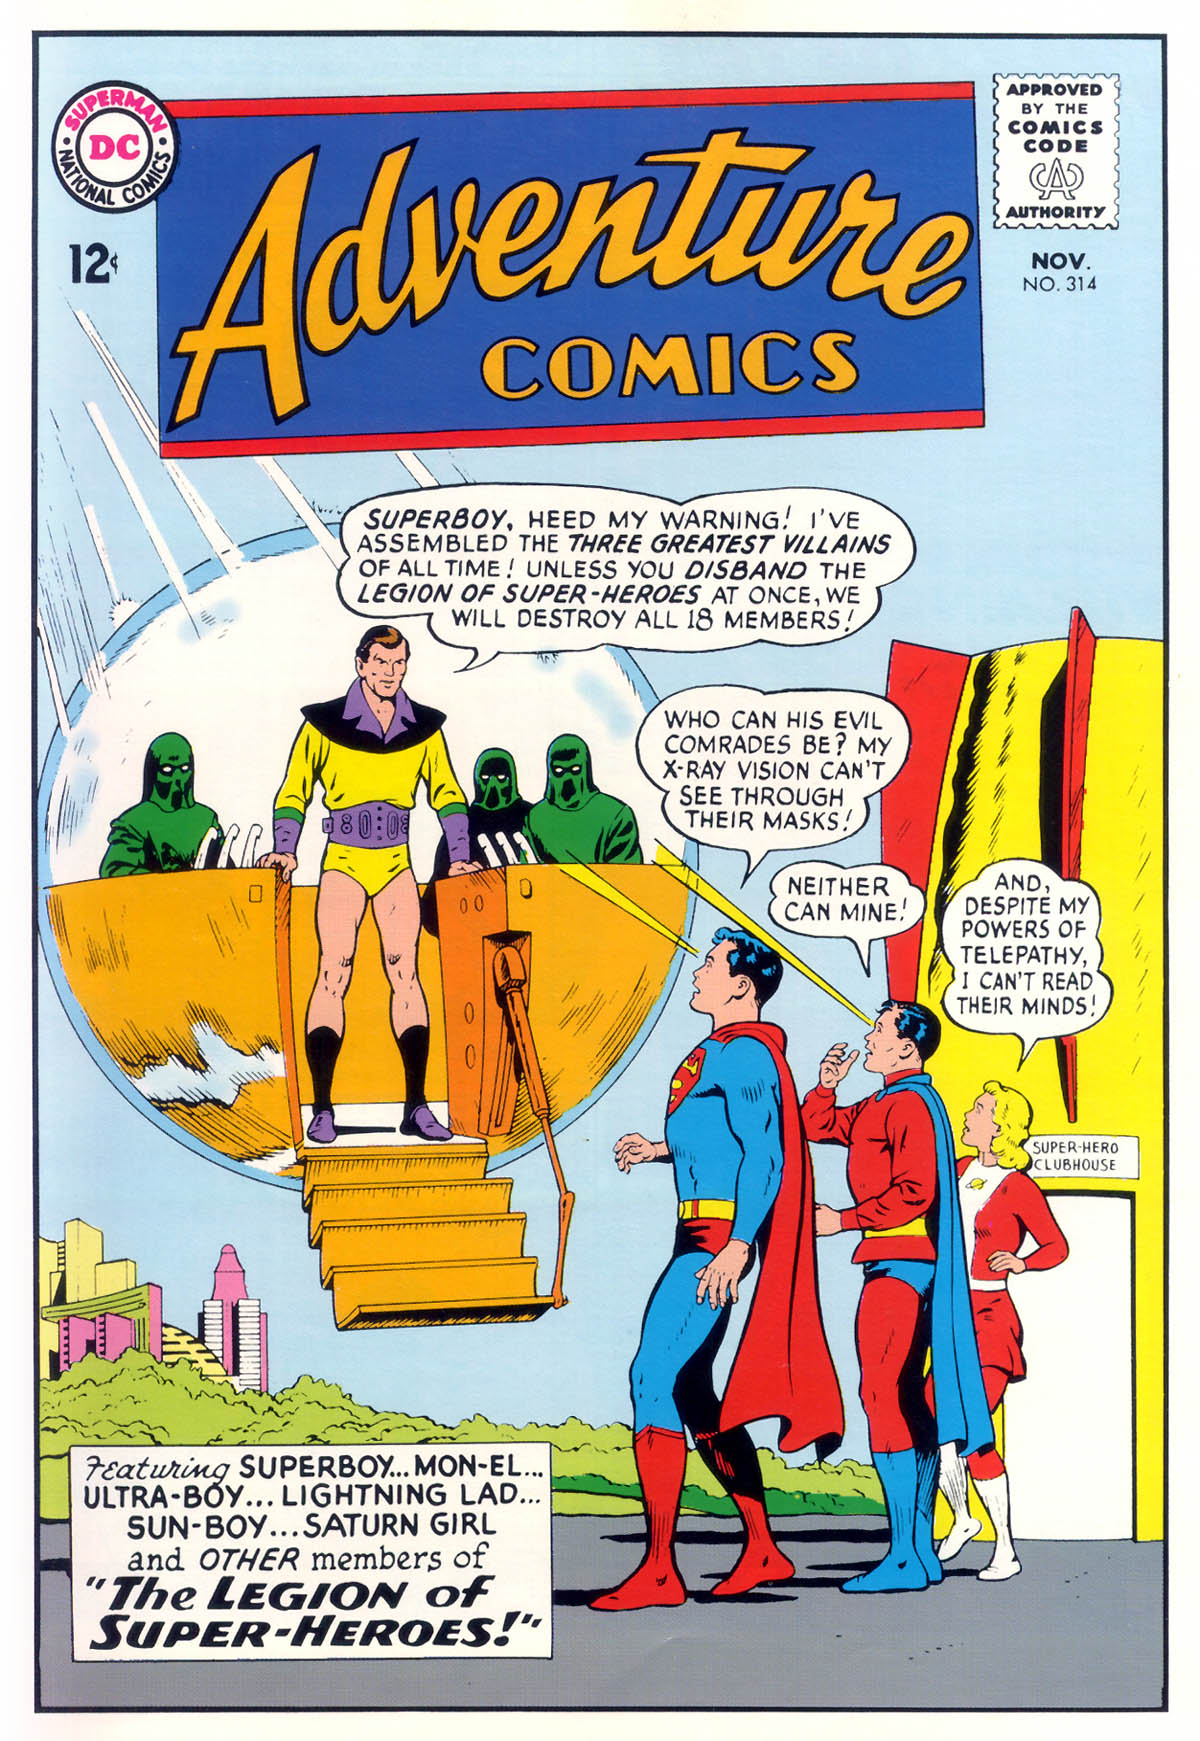 Adventure Comics 314 Nov 1963 Miracle Machine